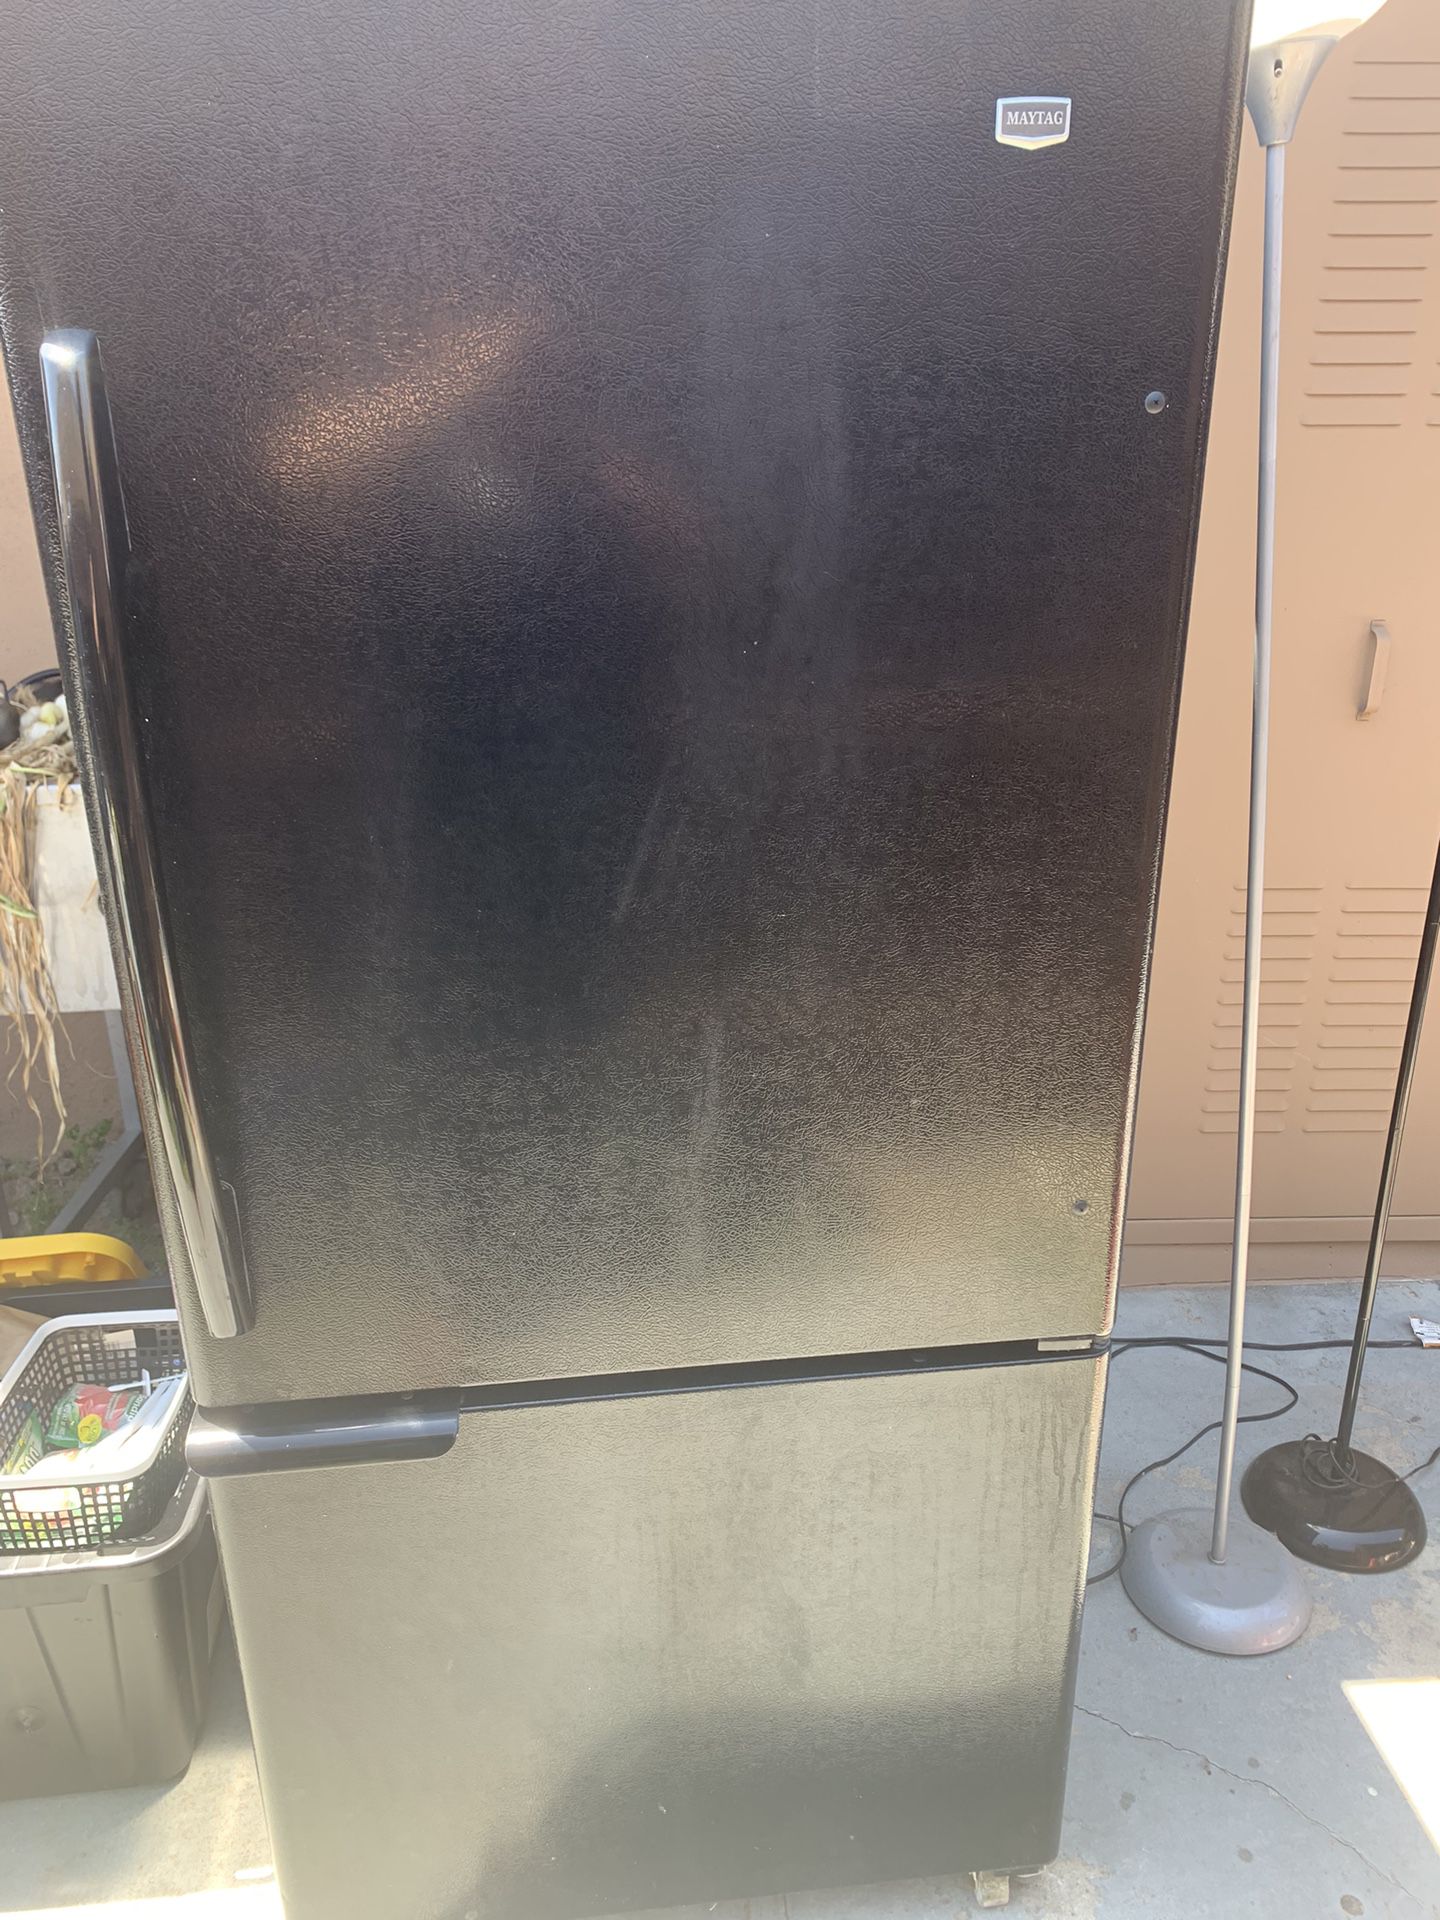 Maytag Refrigerator, Black 